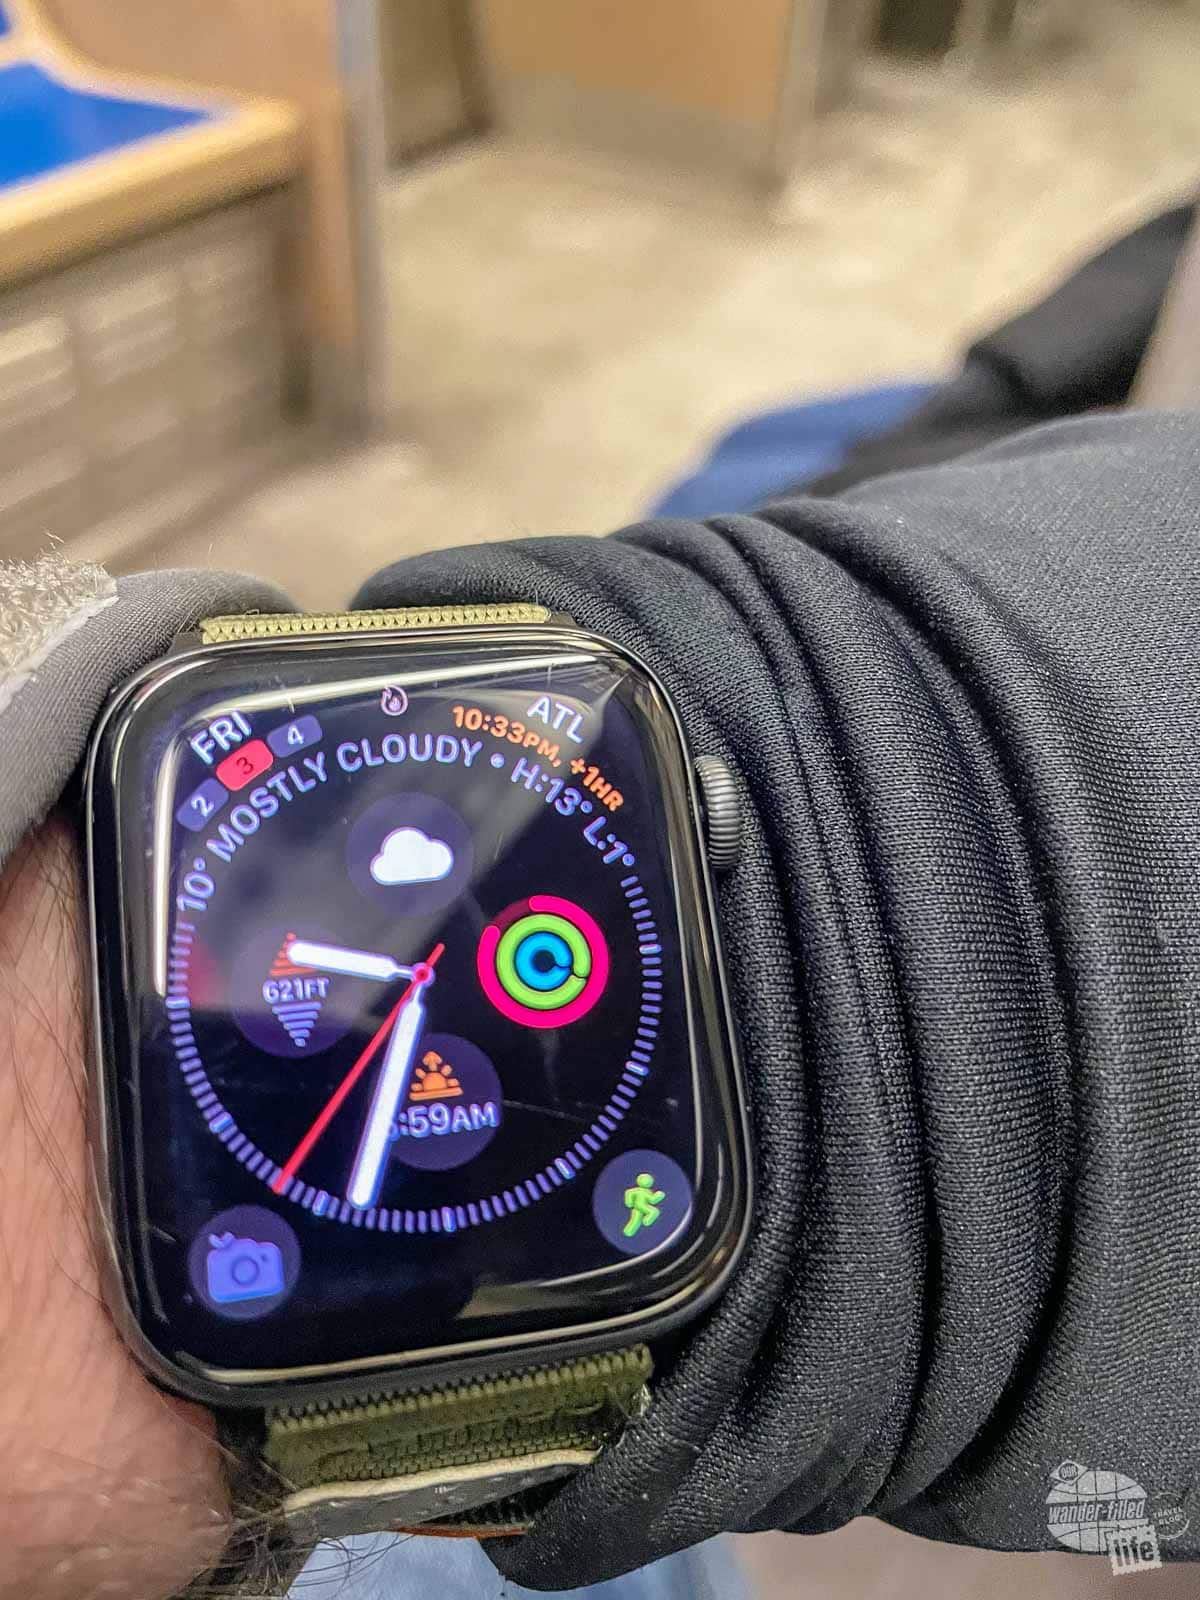 Grant's Apple Watch